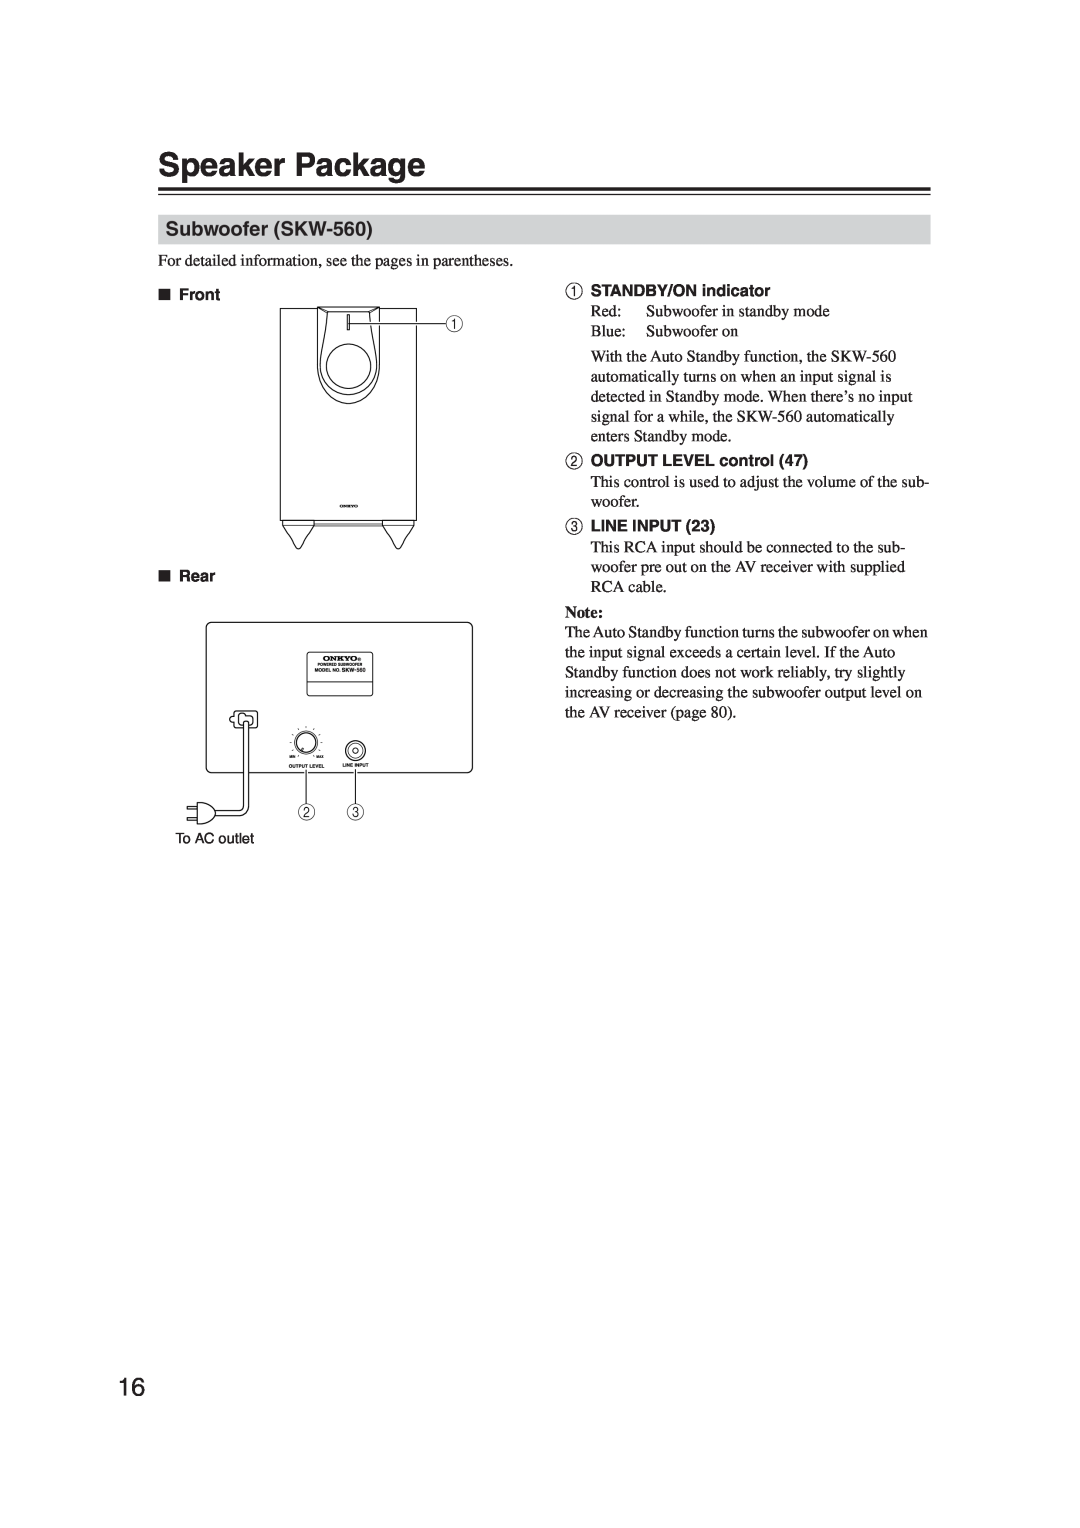 Onkyo S5100 instruction manual Speaker Package, Subwoofer SKW-560 